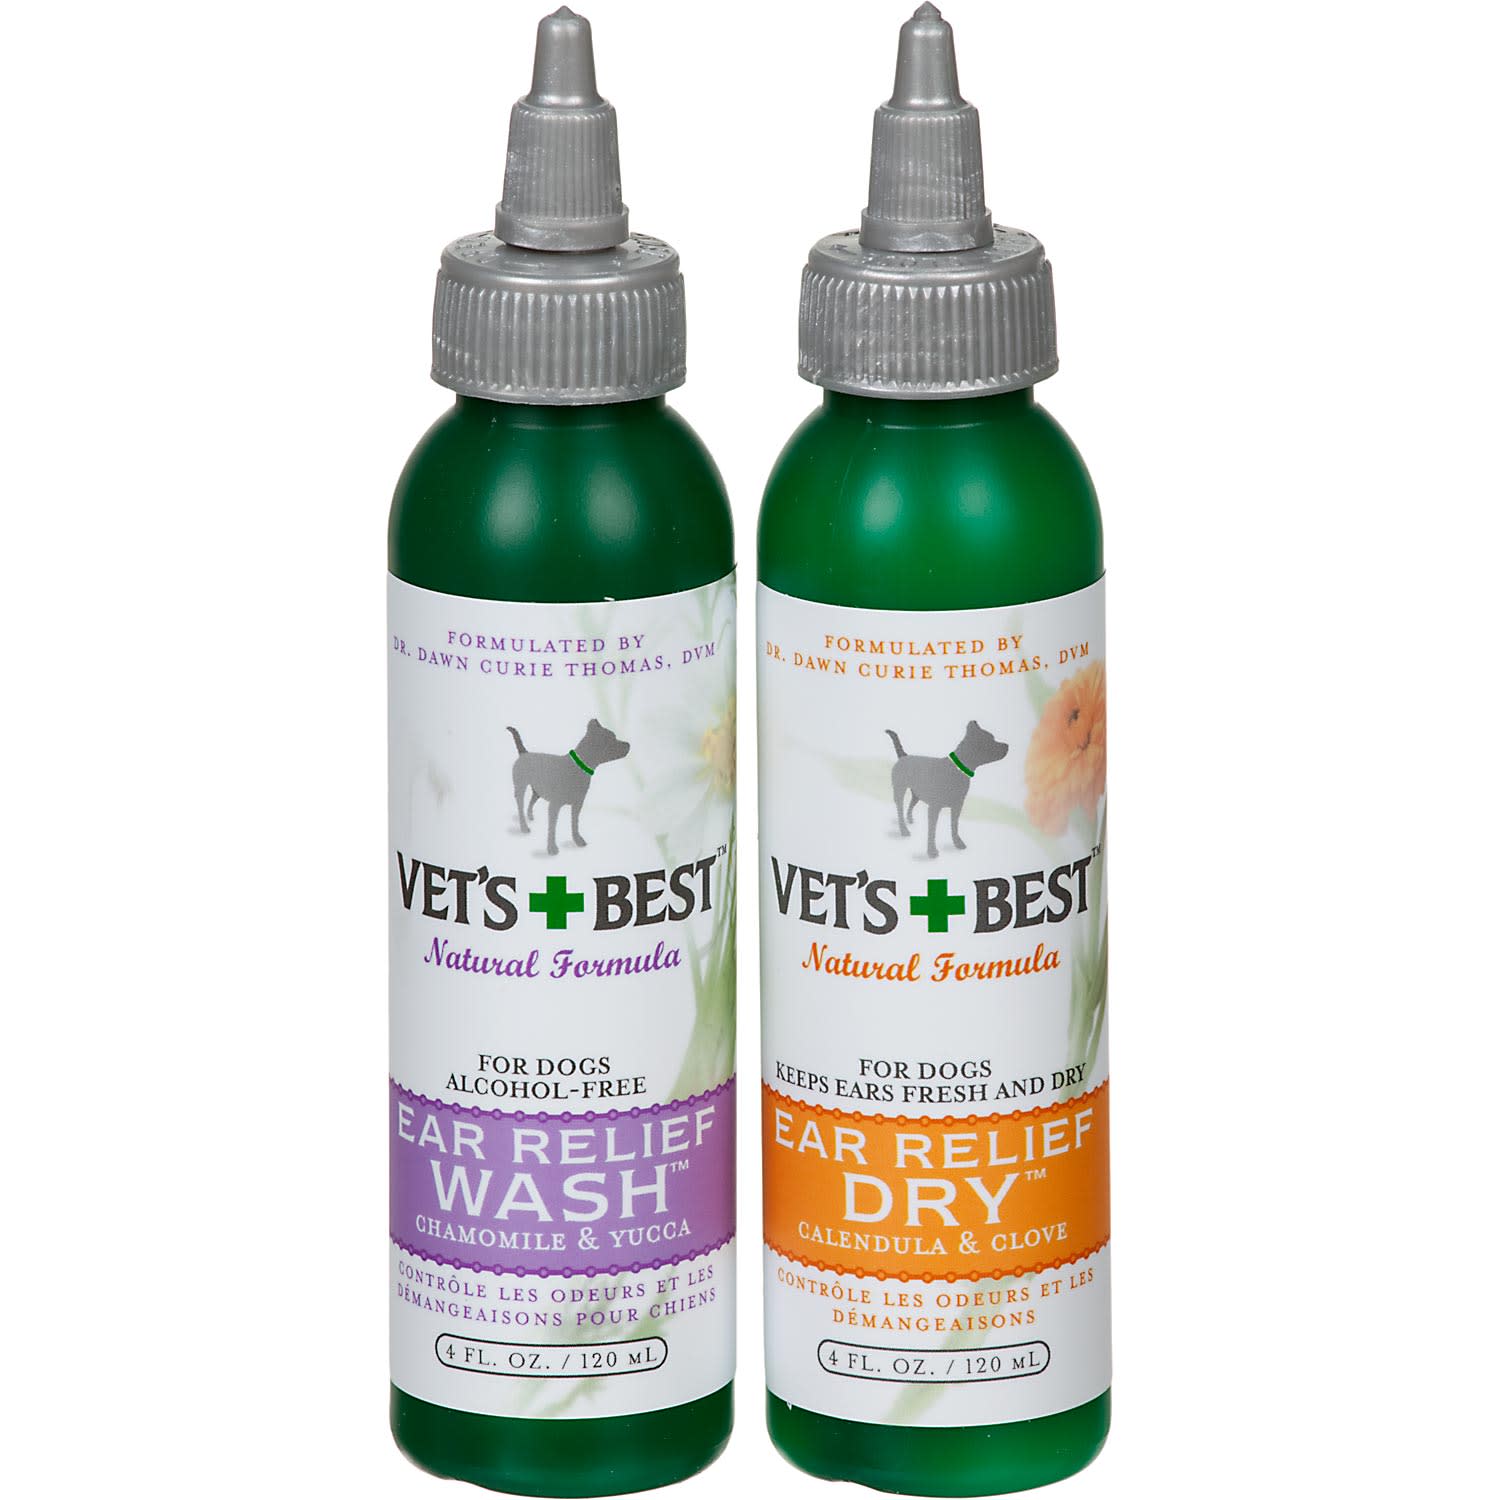 Photos - Other Pet Supplies Vets Best Vet's Best Vet's Best Ear Relief Wash & Dry for Dogs, 4 FZ, 4-oz bottle 31 